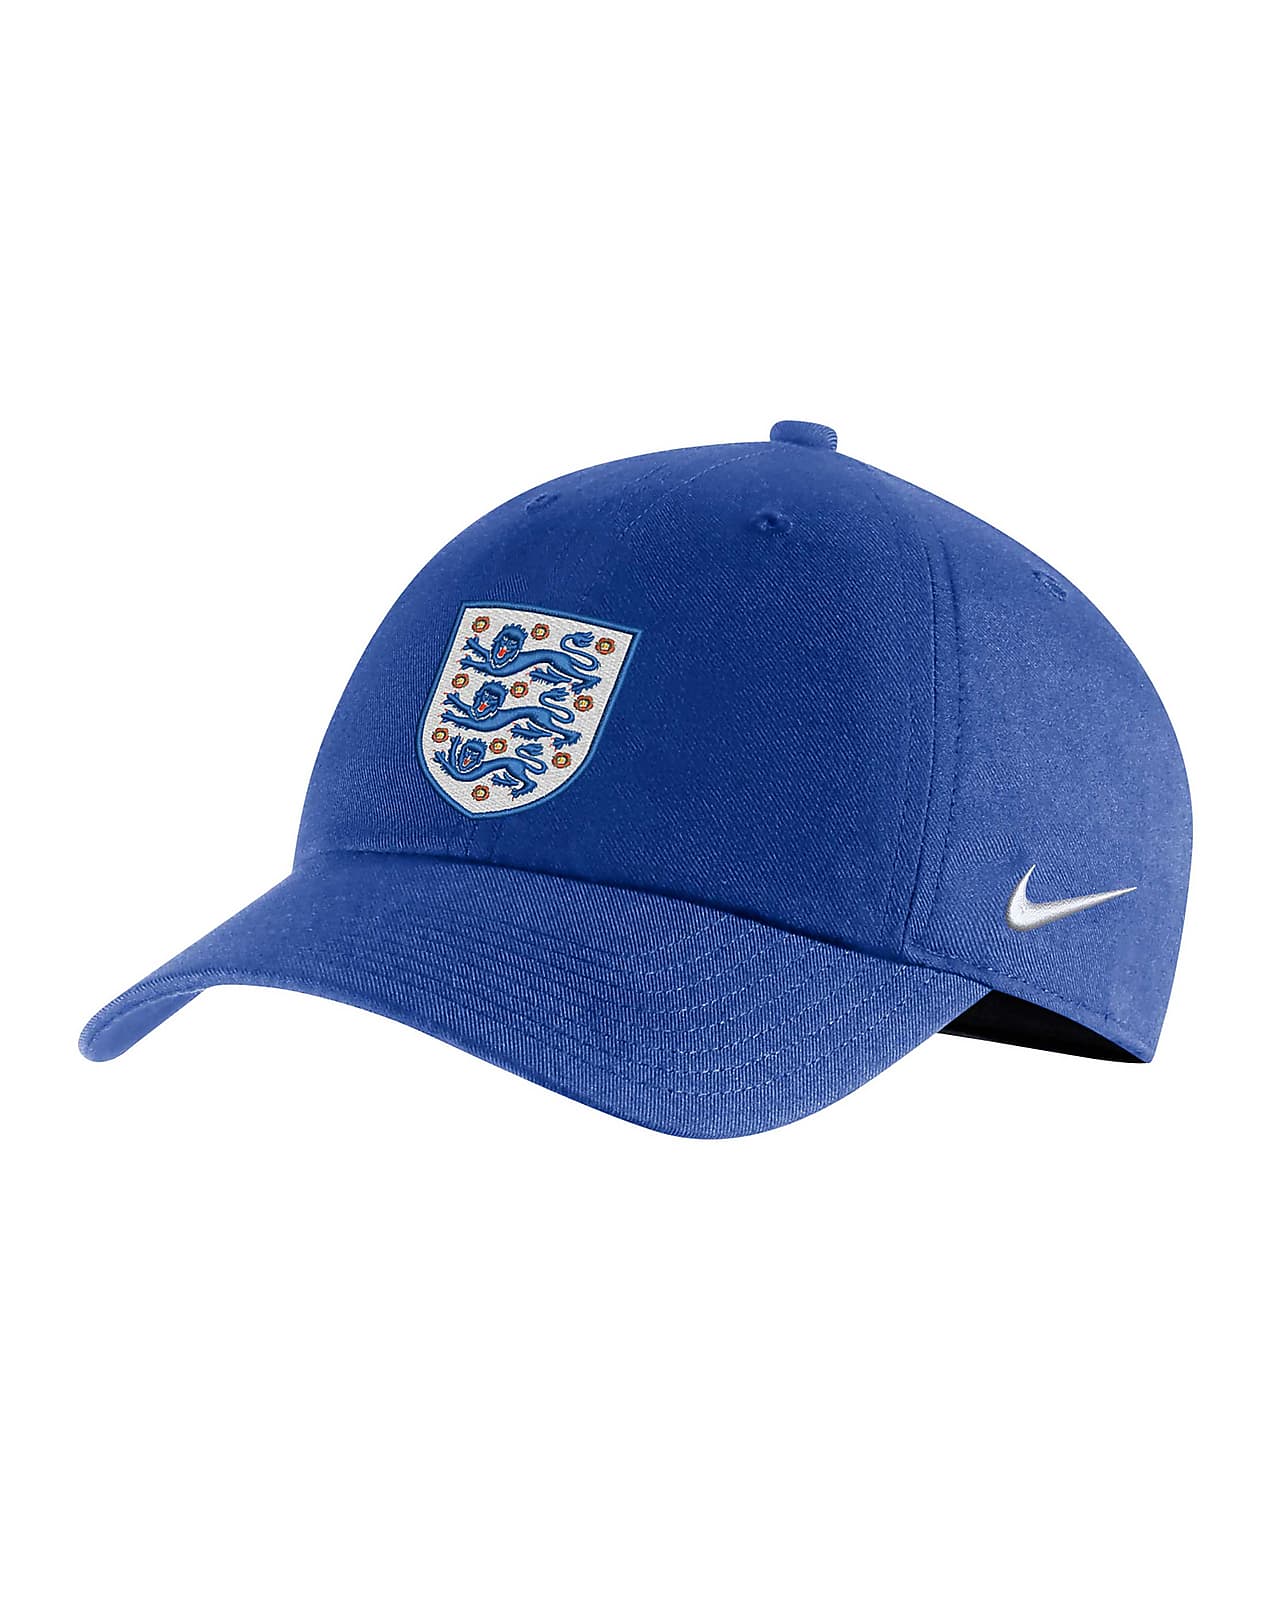 England Heritage86 Men's Hat. Nike.com